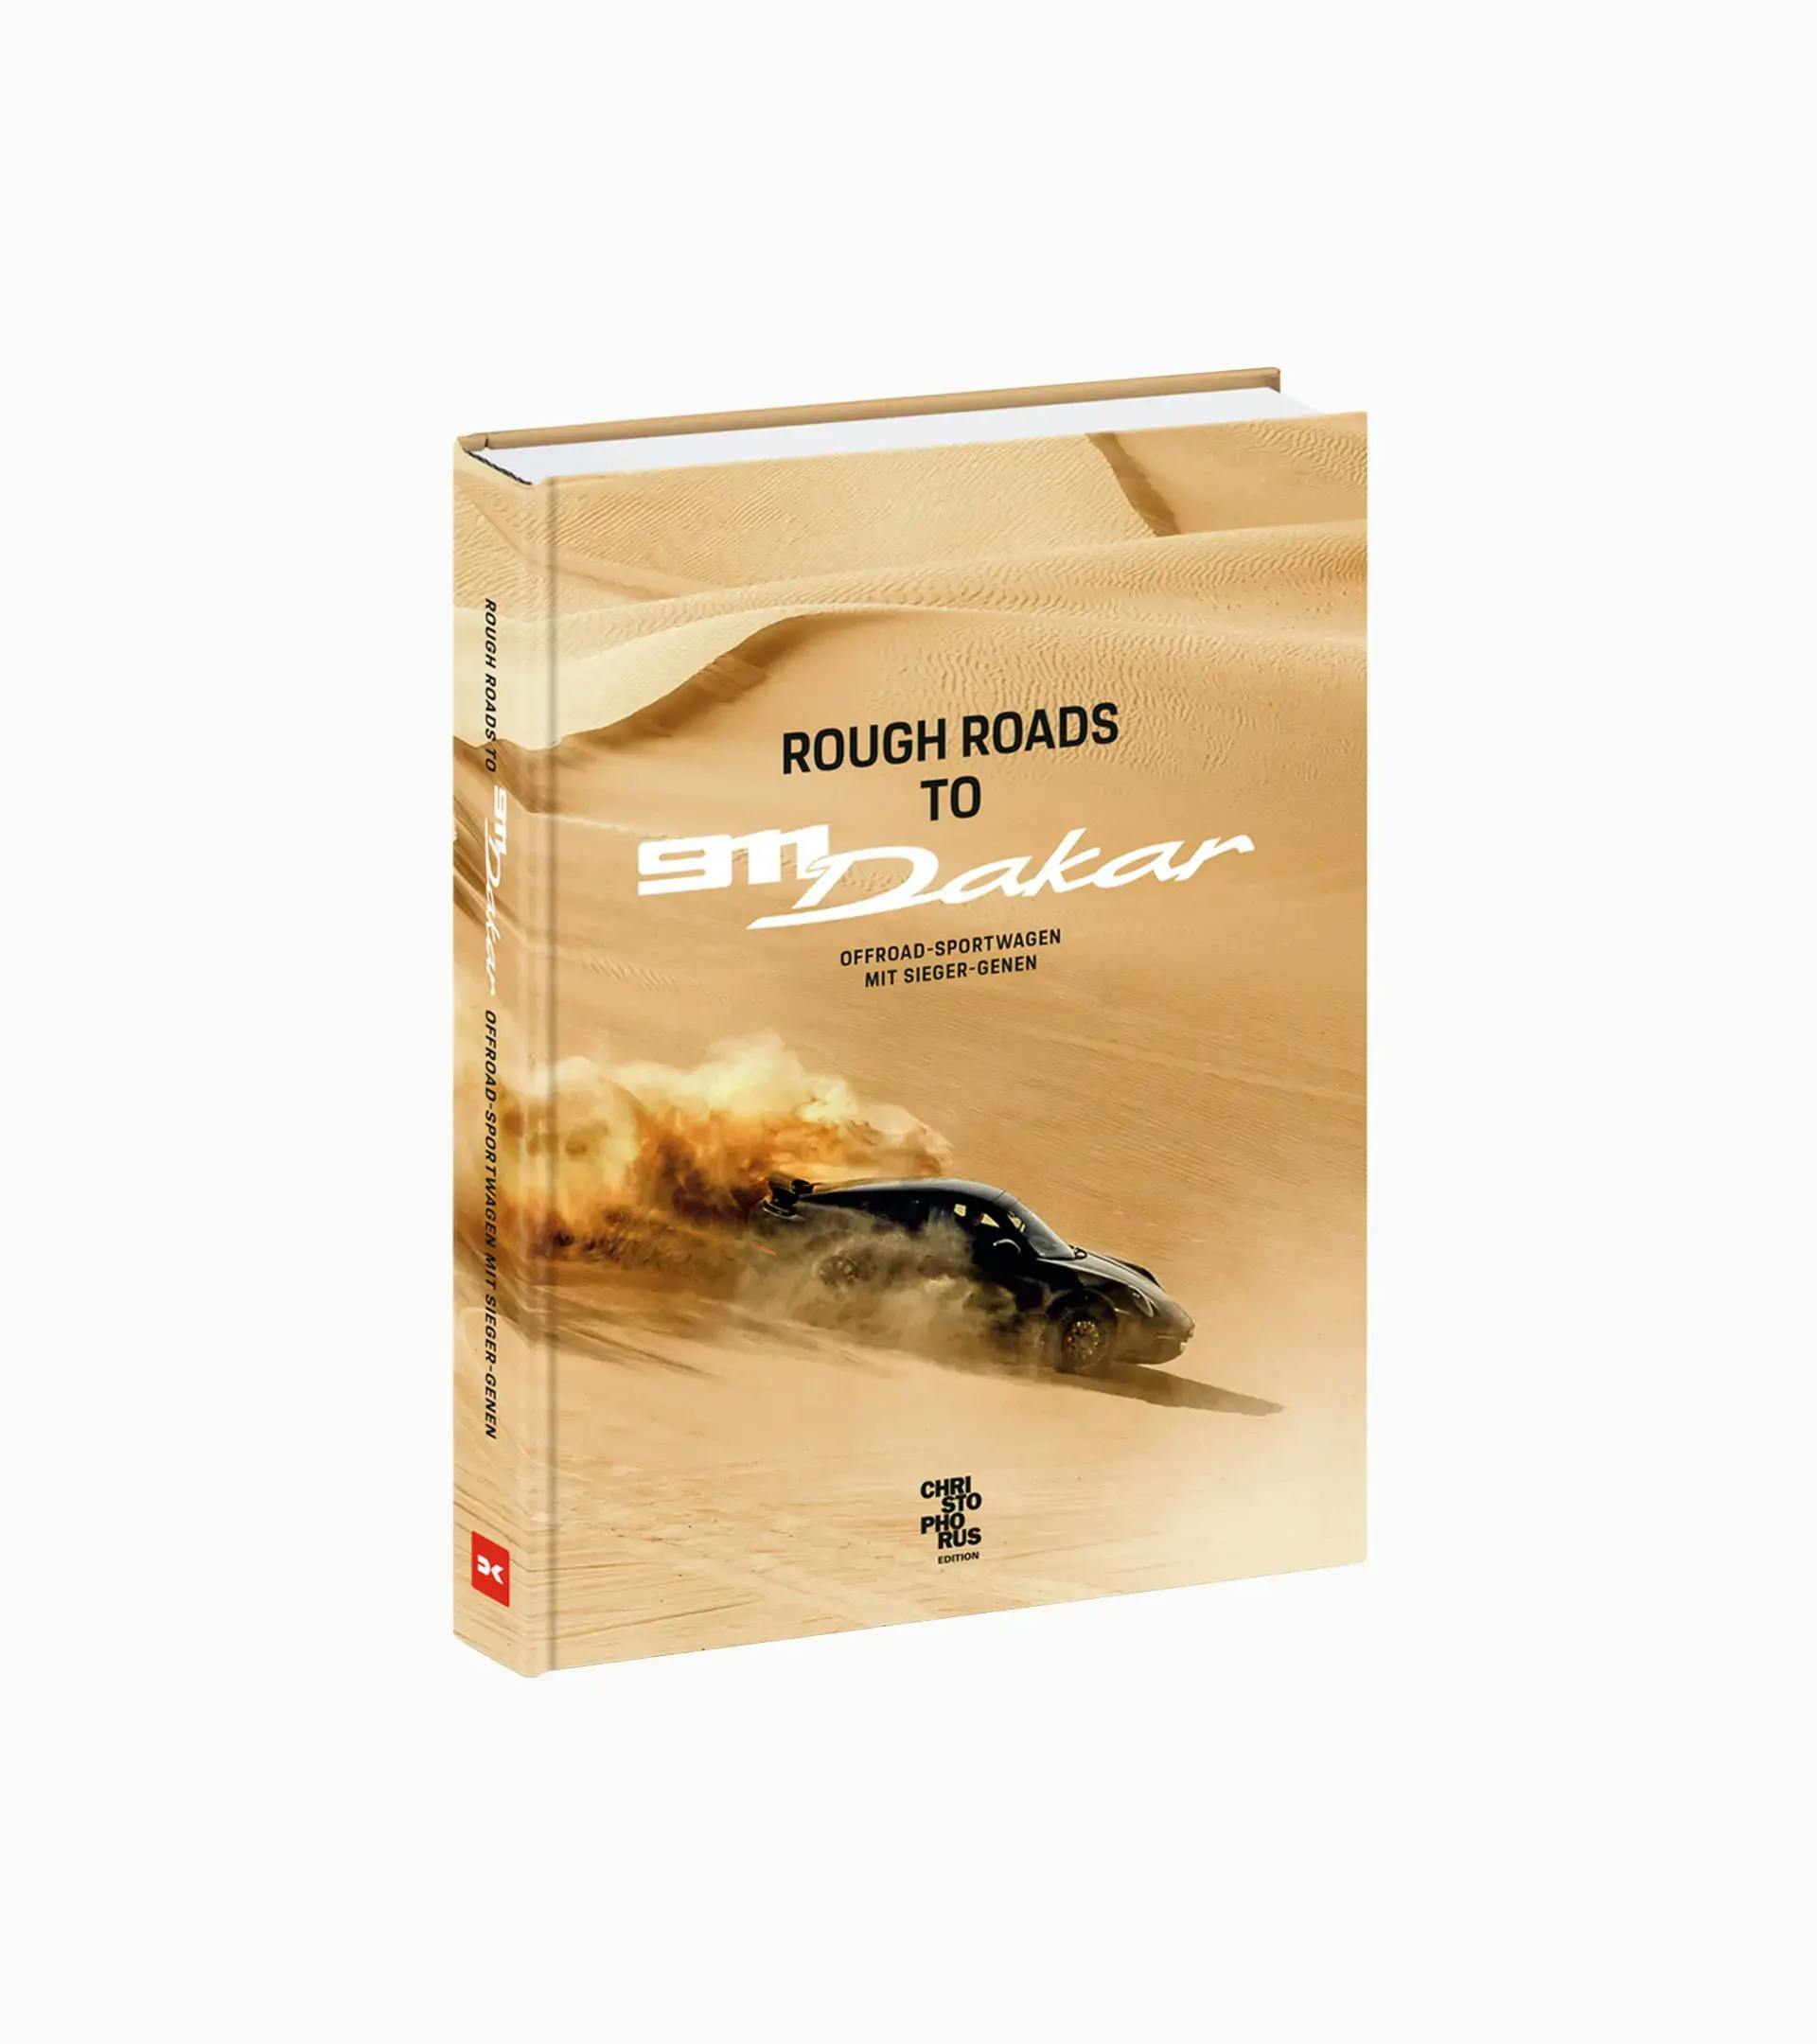 Book 'Rough Roads to 911 Dakar'